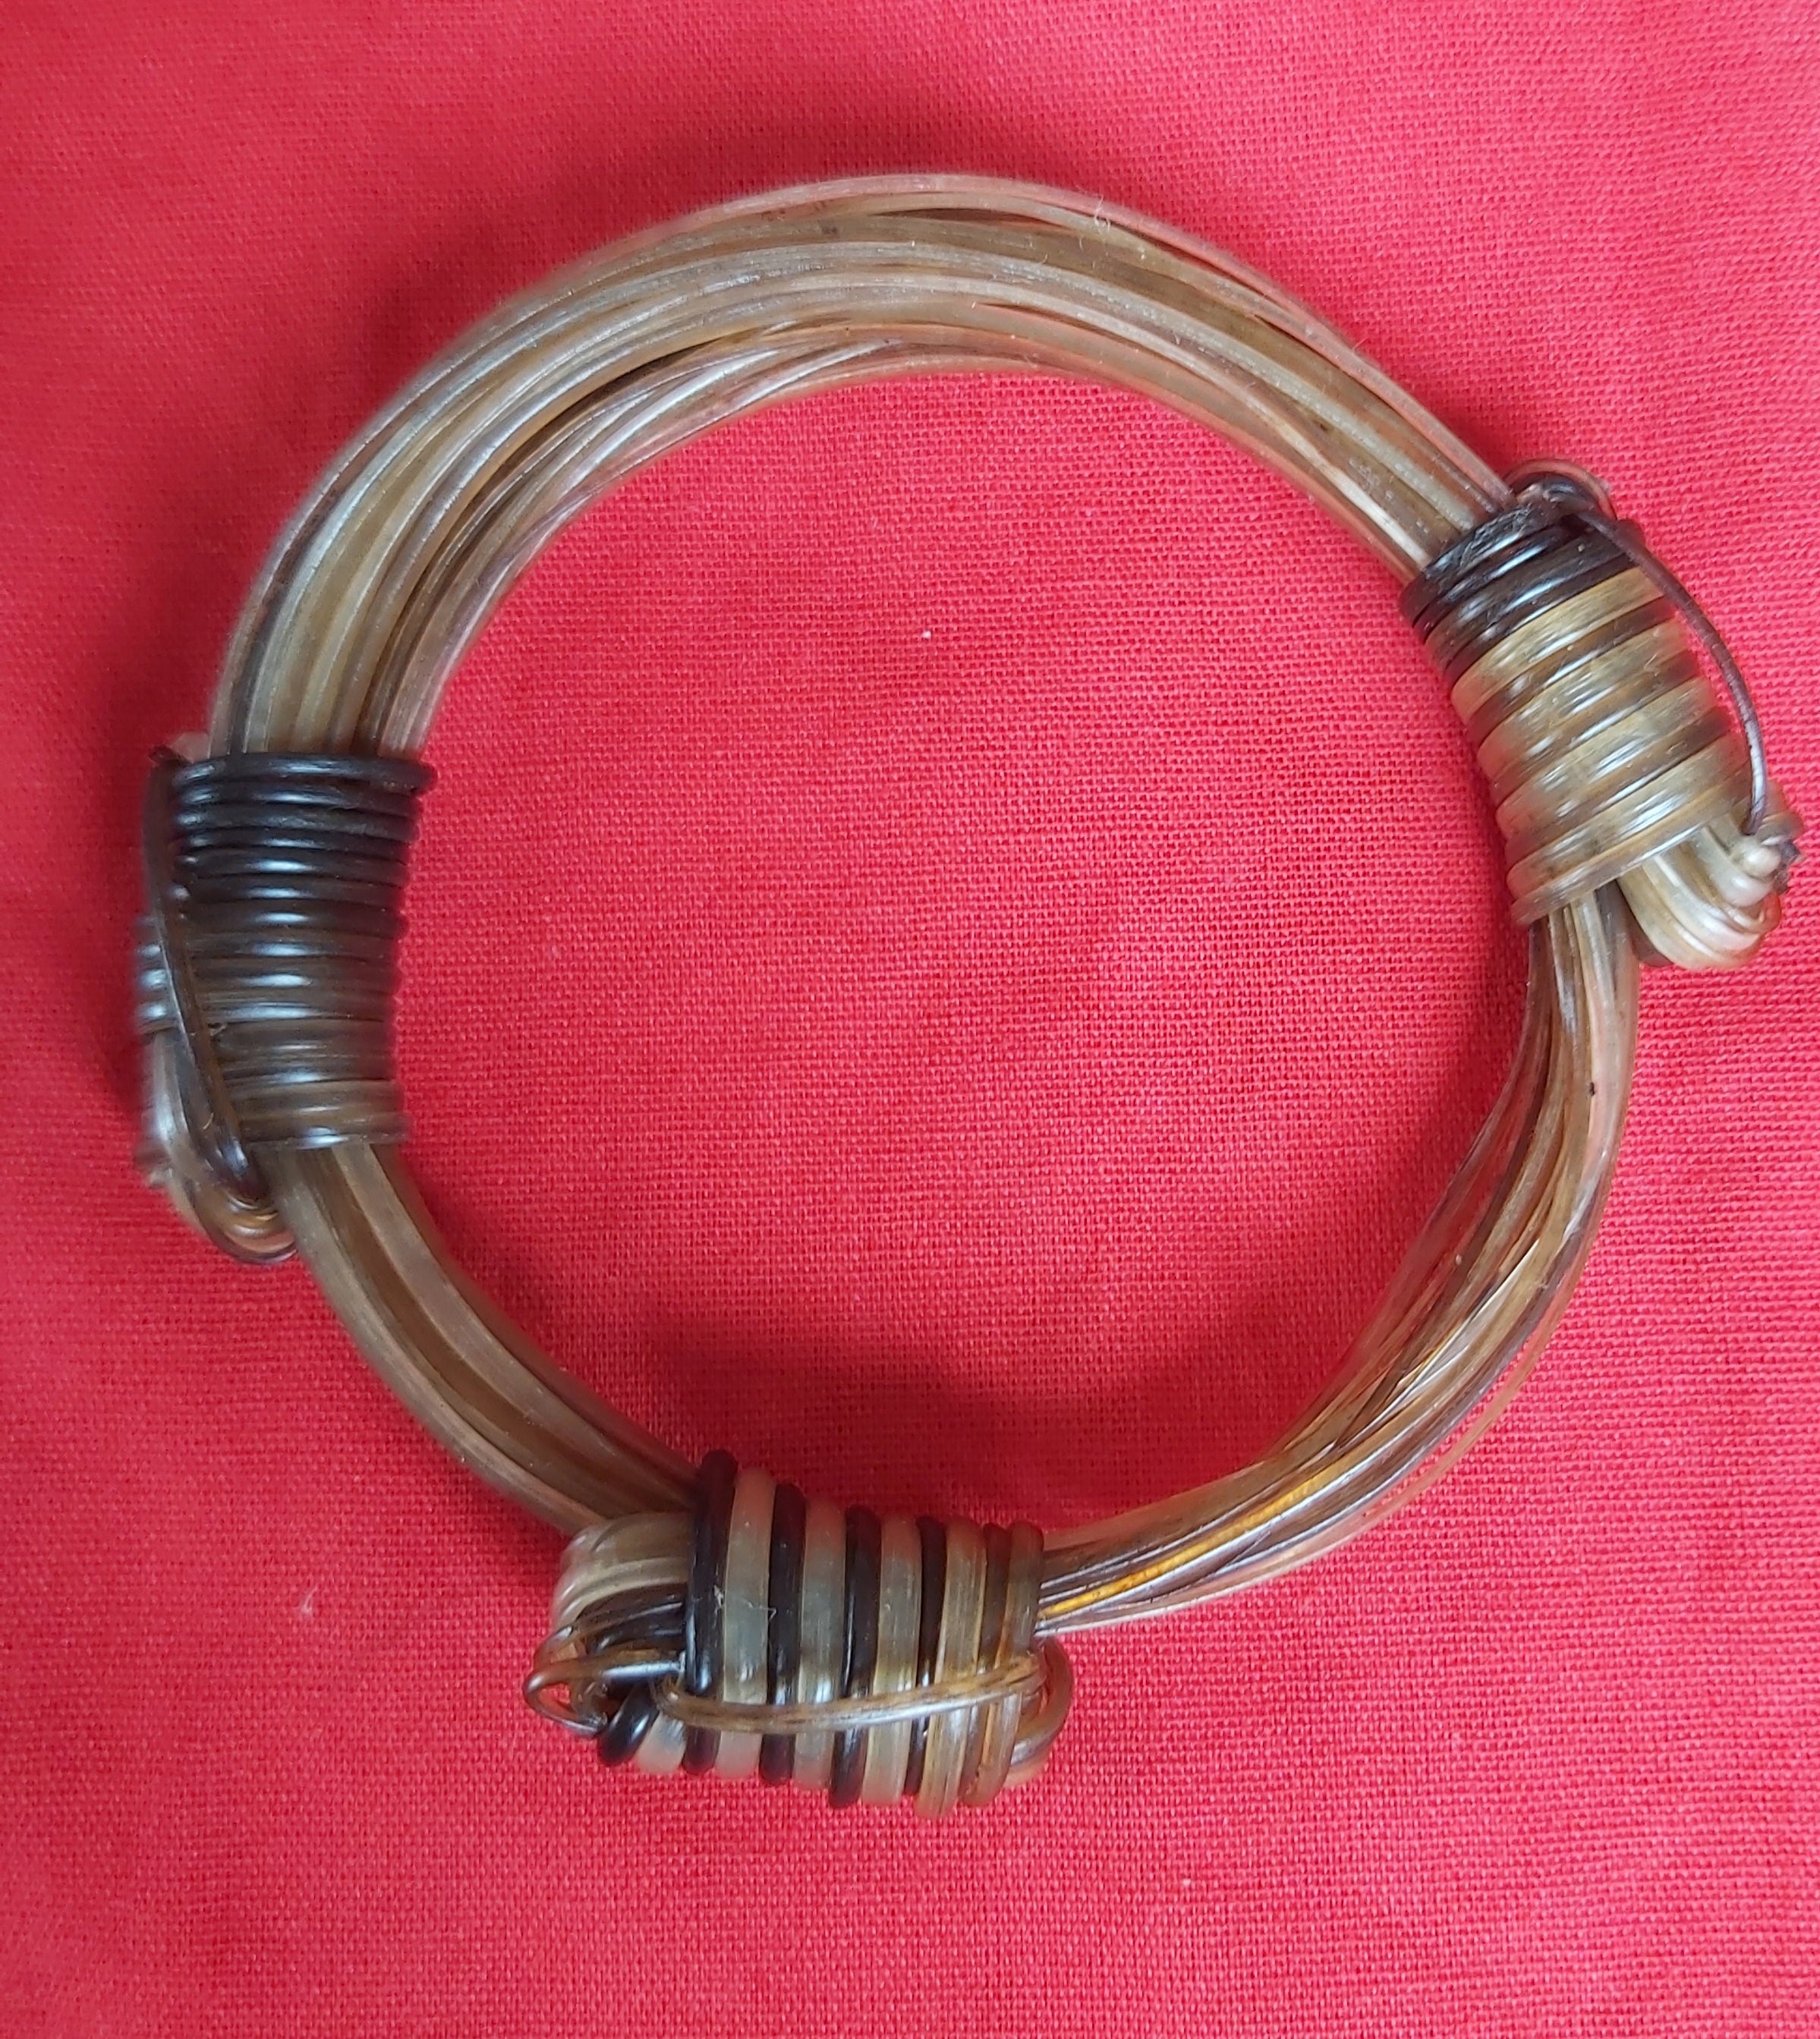 MC14 Multy color elephant hair bracelet 3.5" diameter